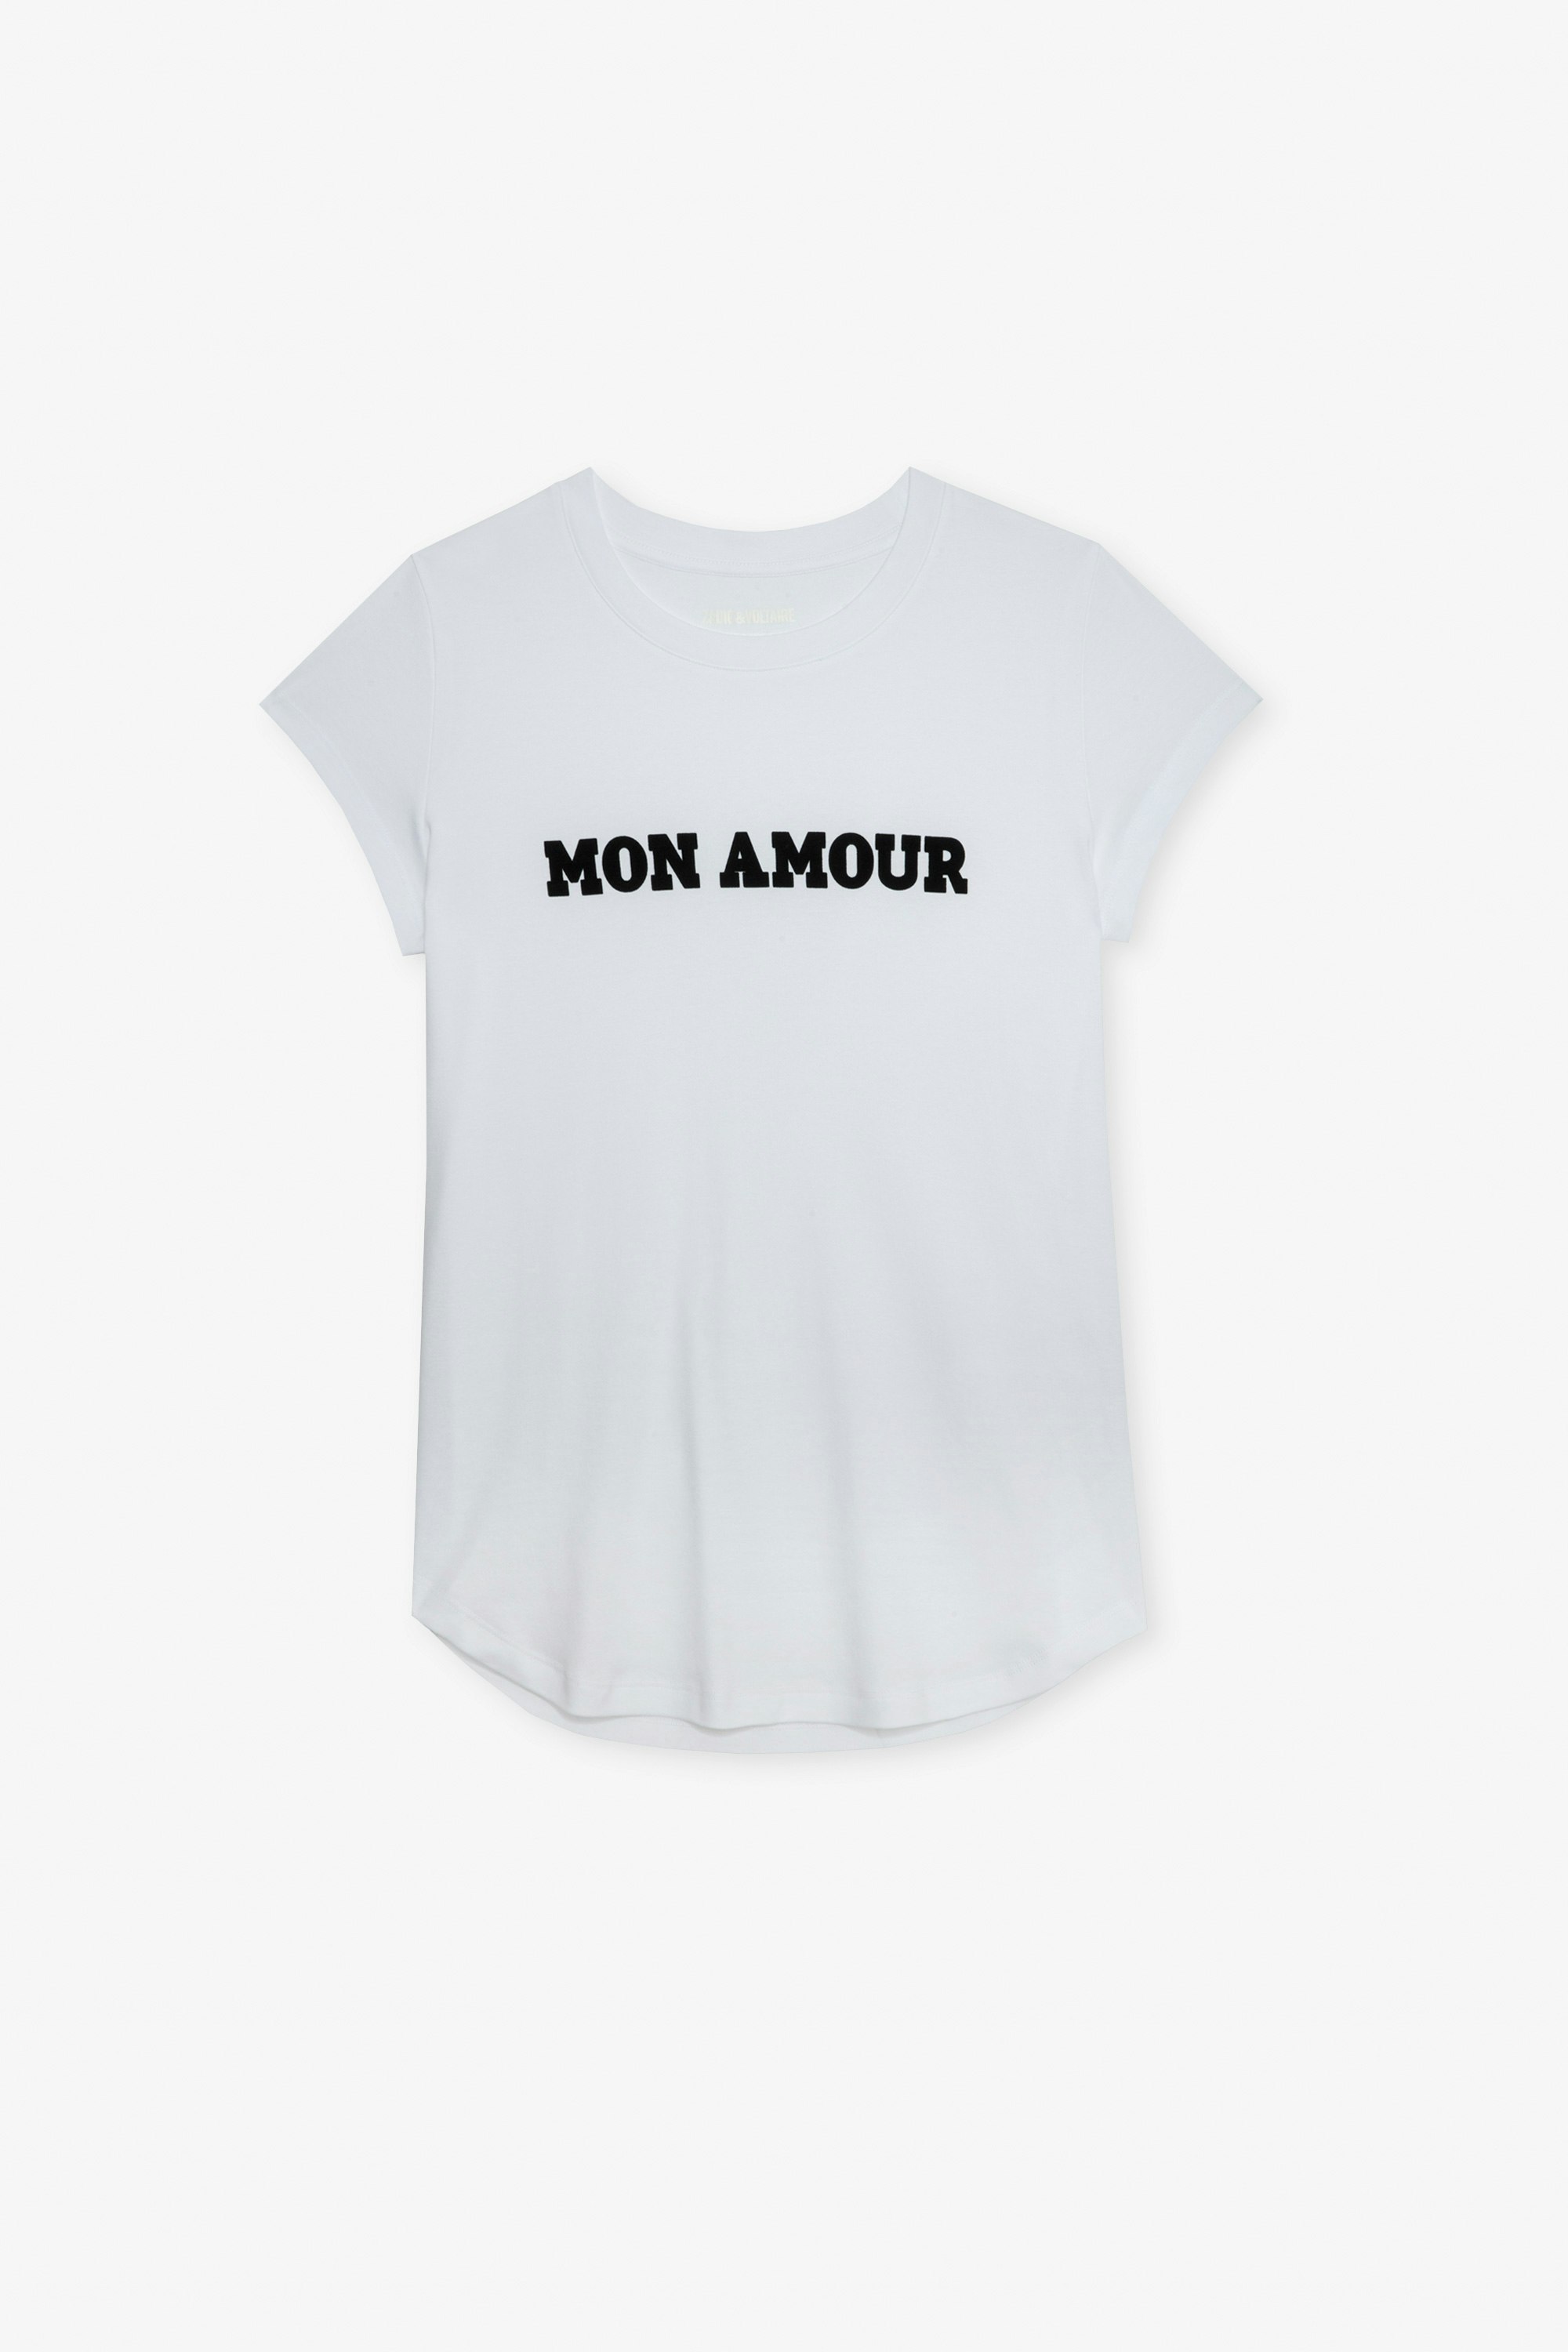 Woop Mon Amour T-shirt - Women’s white cotton T-shirt with “Mon amour” slogan.